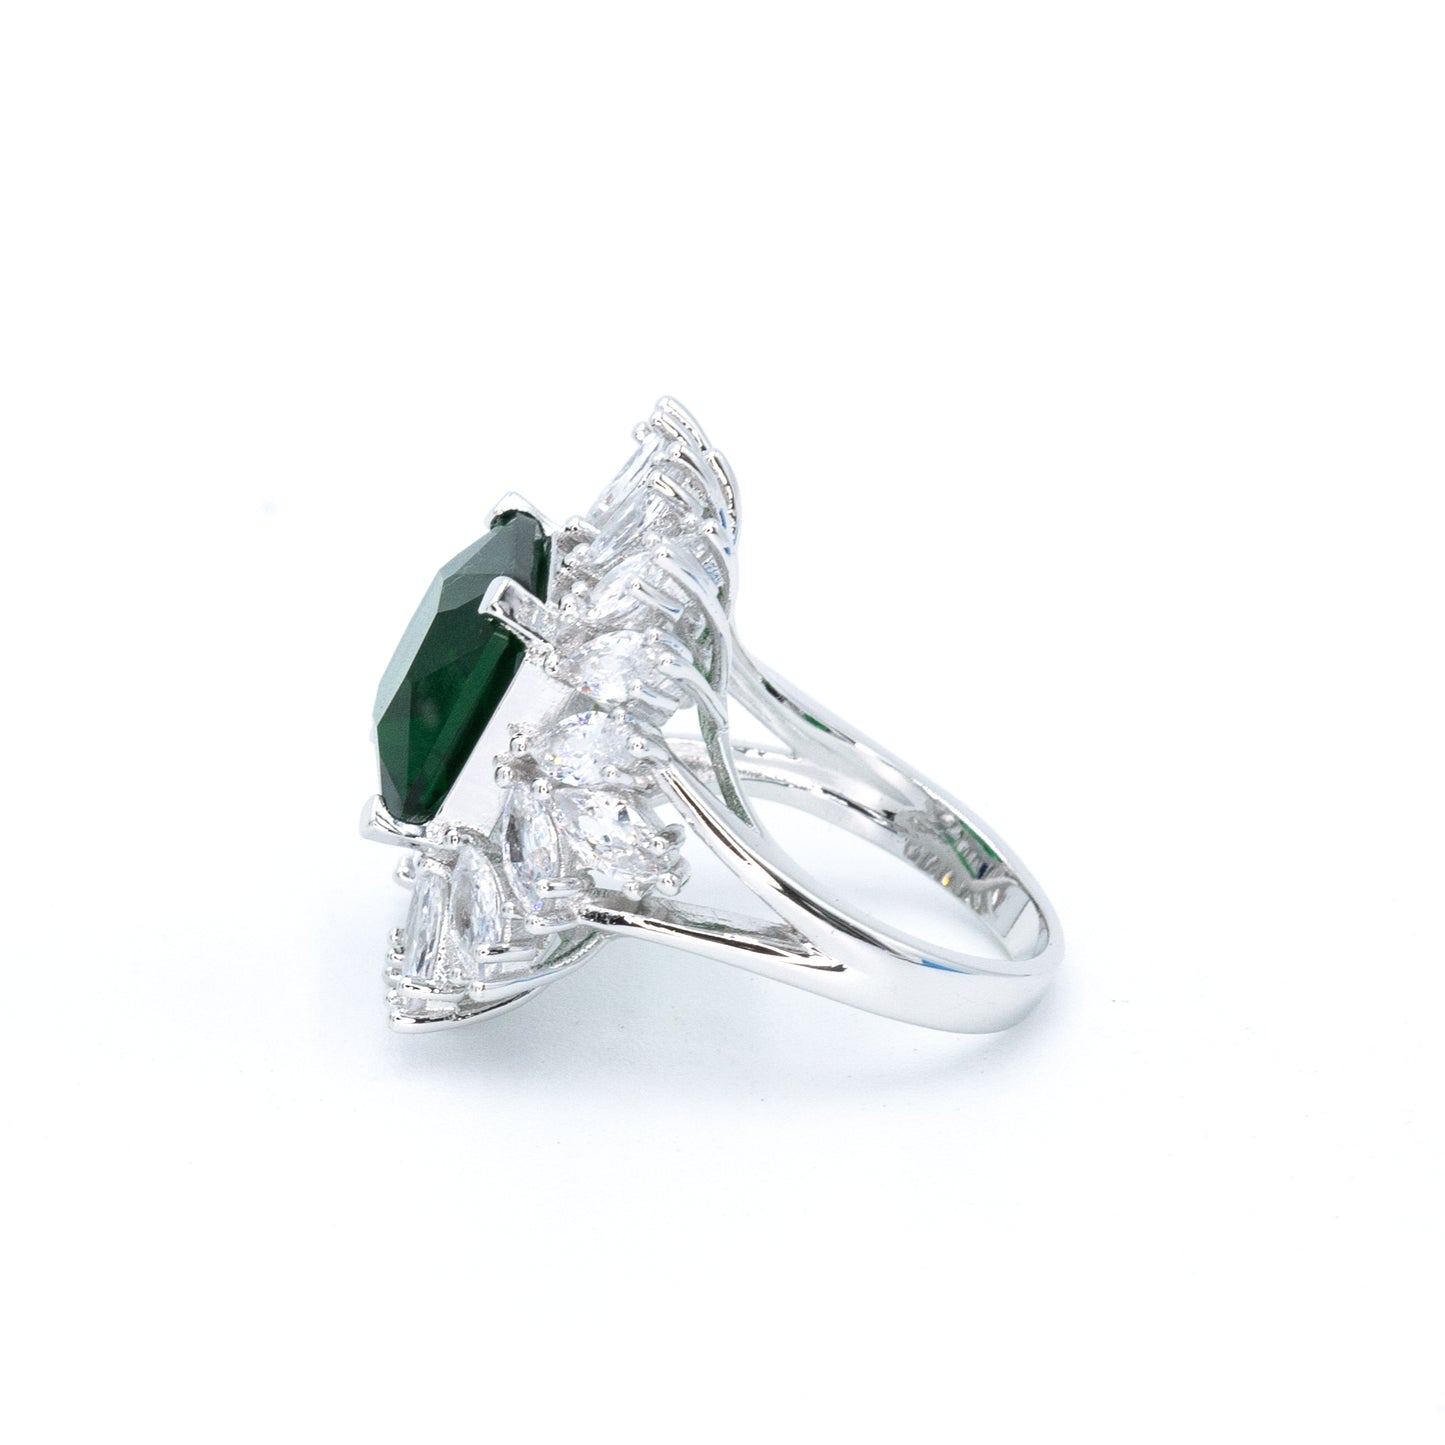 Single Emerald Stone Ring